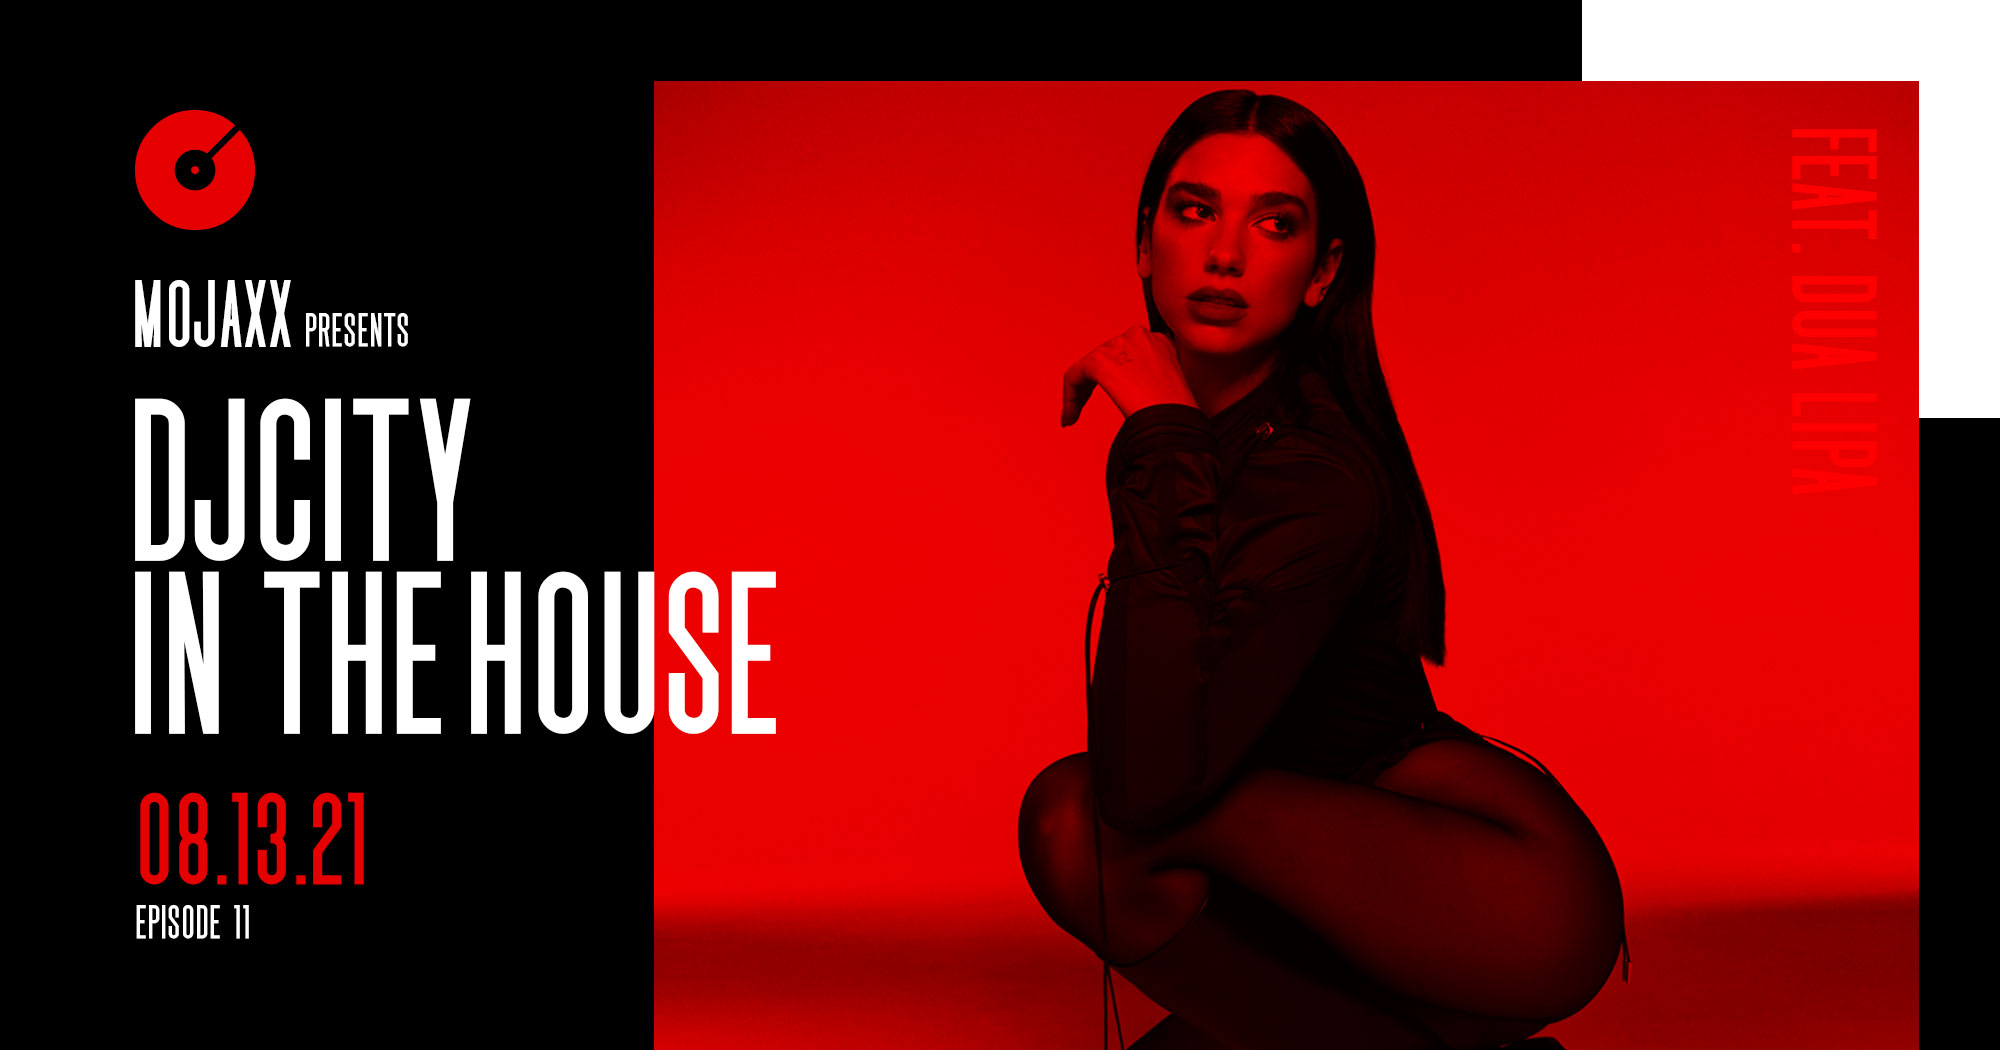 Listen to ‘DJcity in the House’ Feat. Mojaxx: August 13